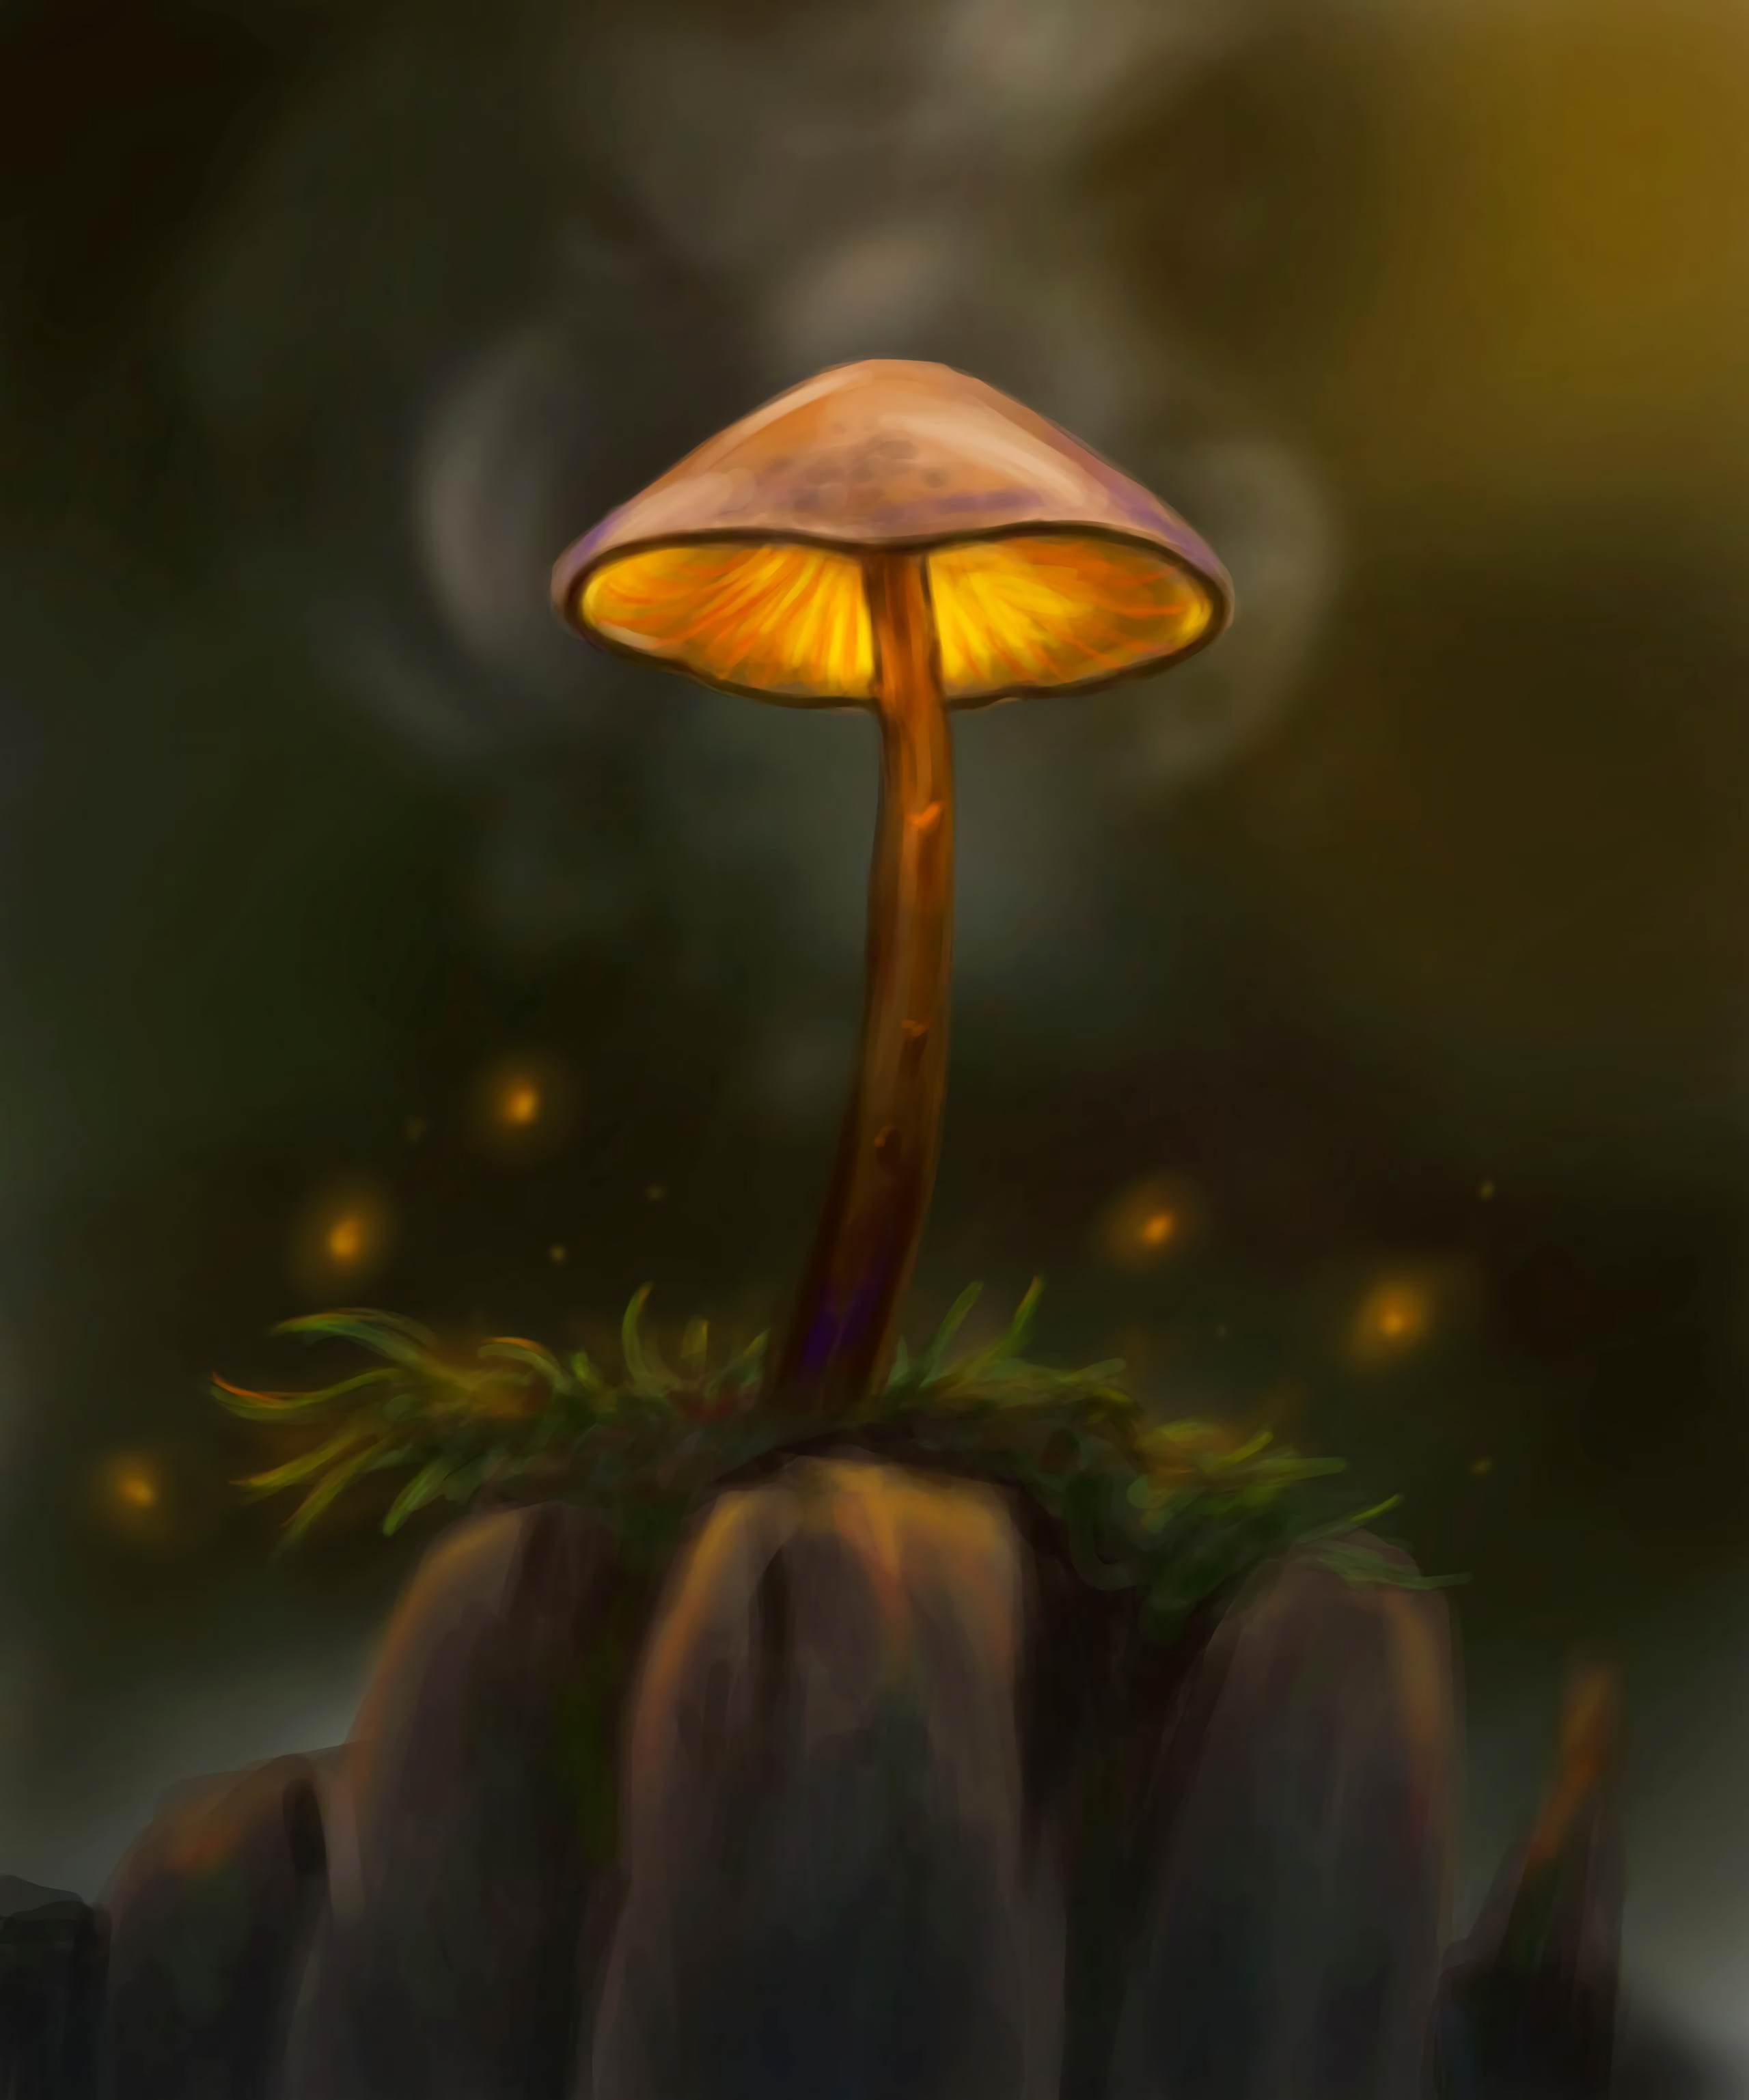 Mushroom iPhone wallpapers